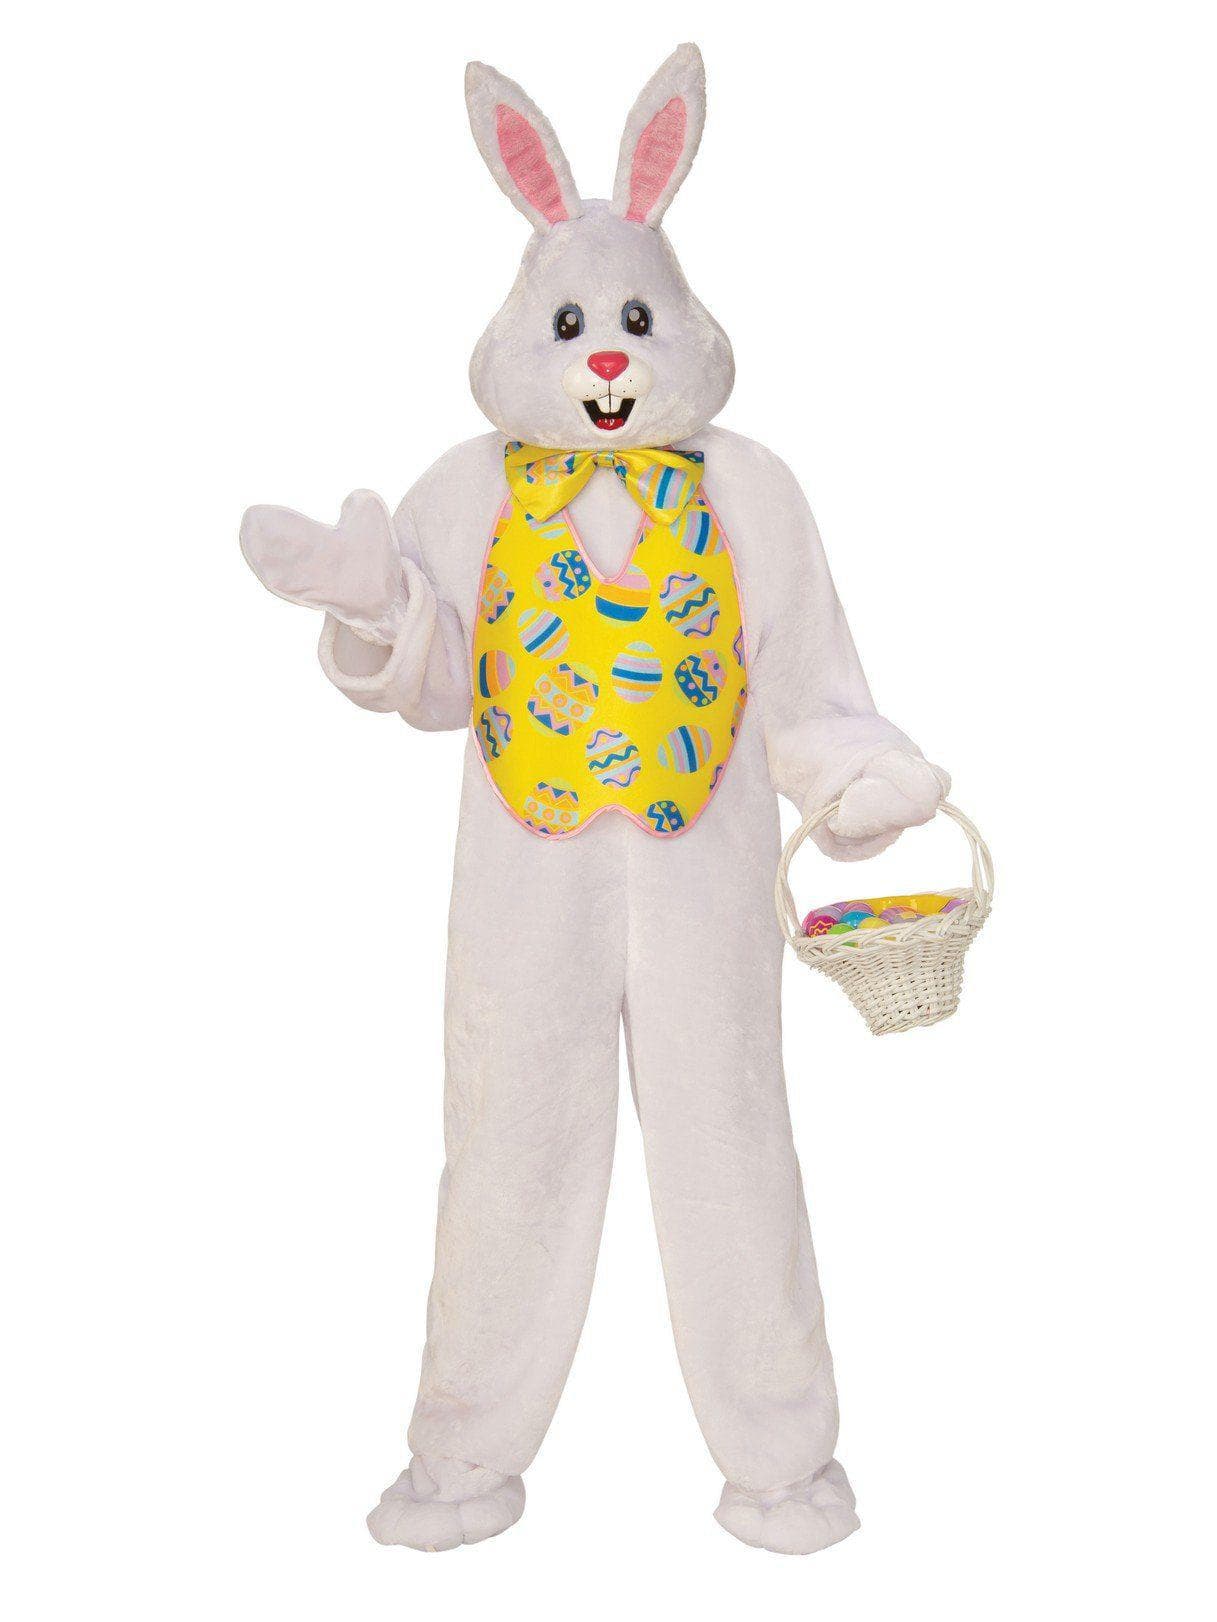 Bunny Costume - costumes.com